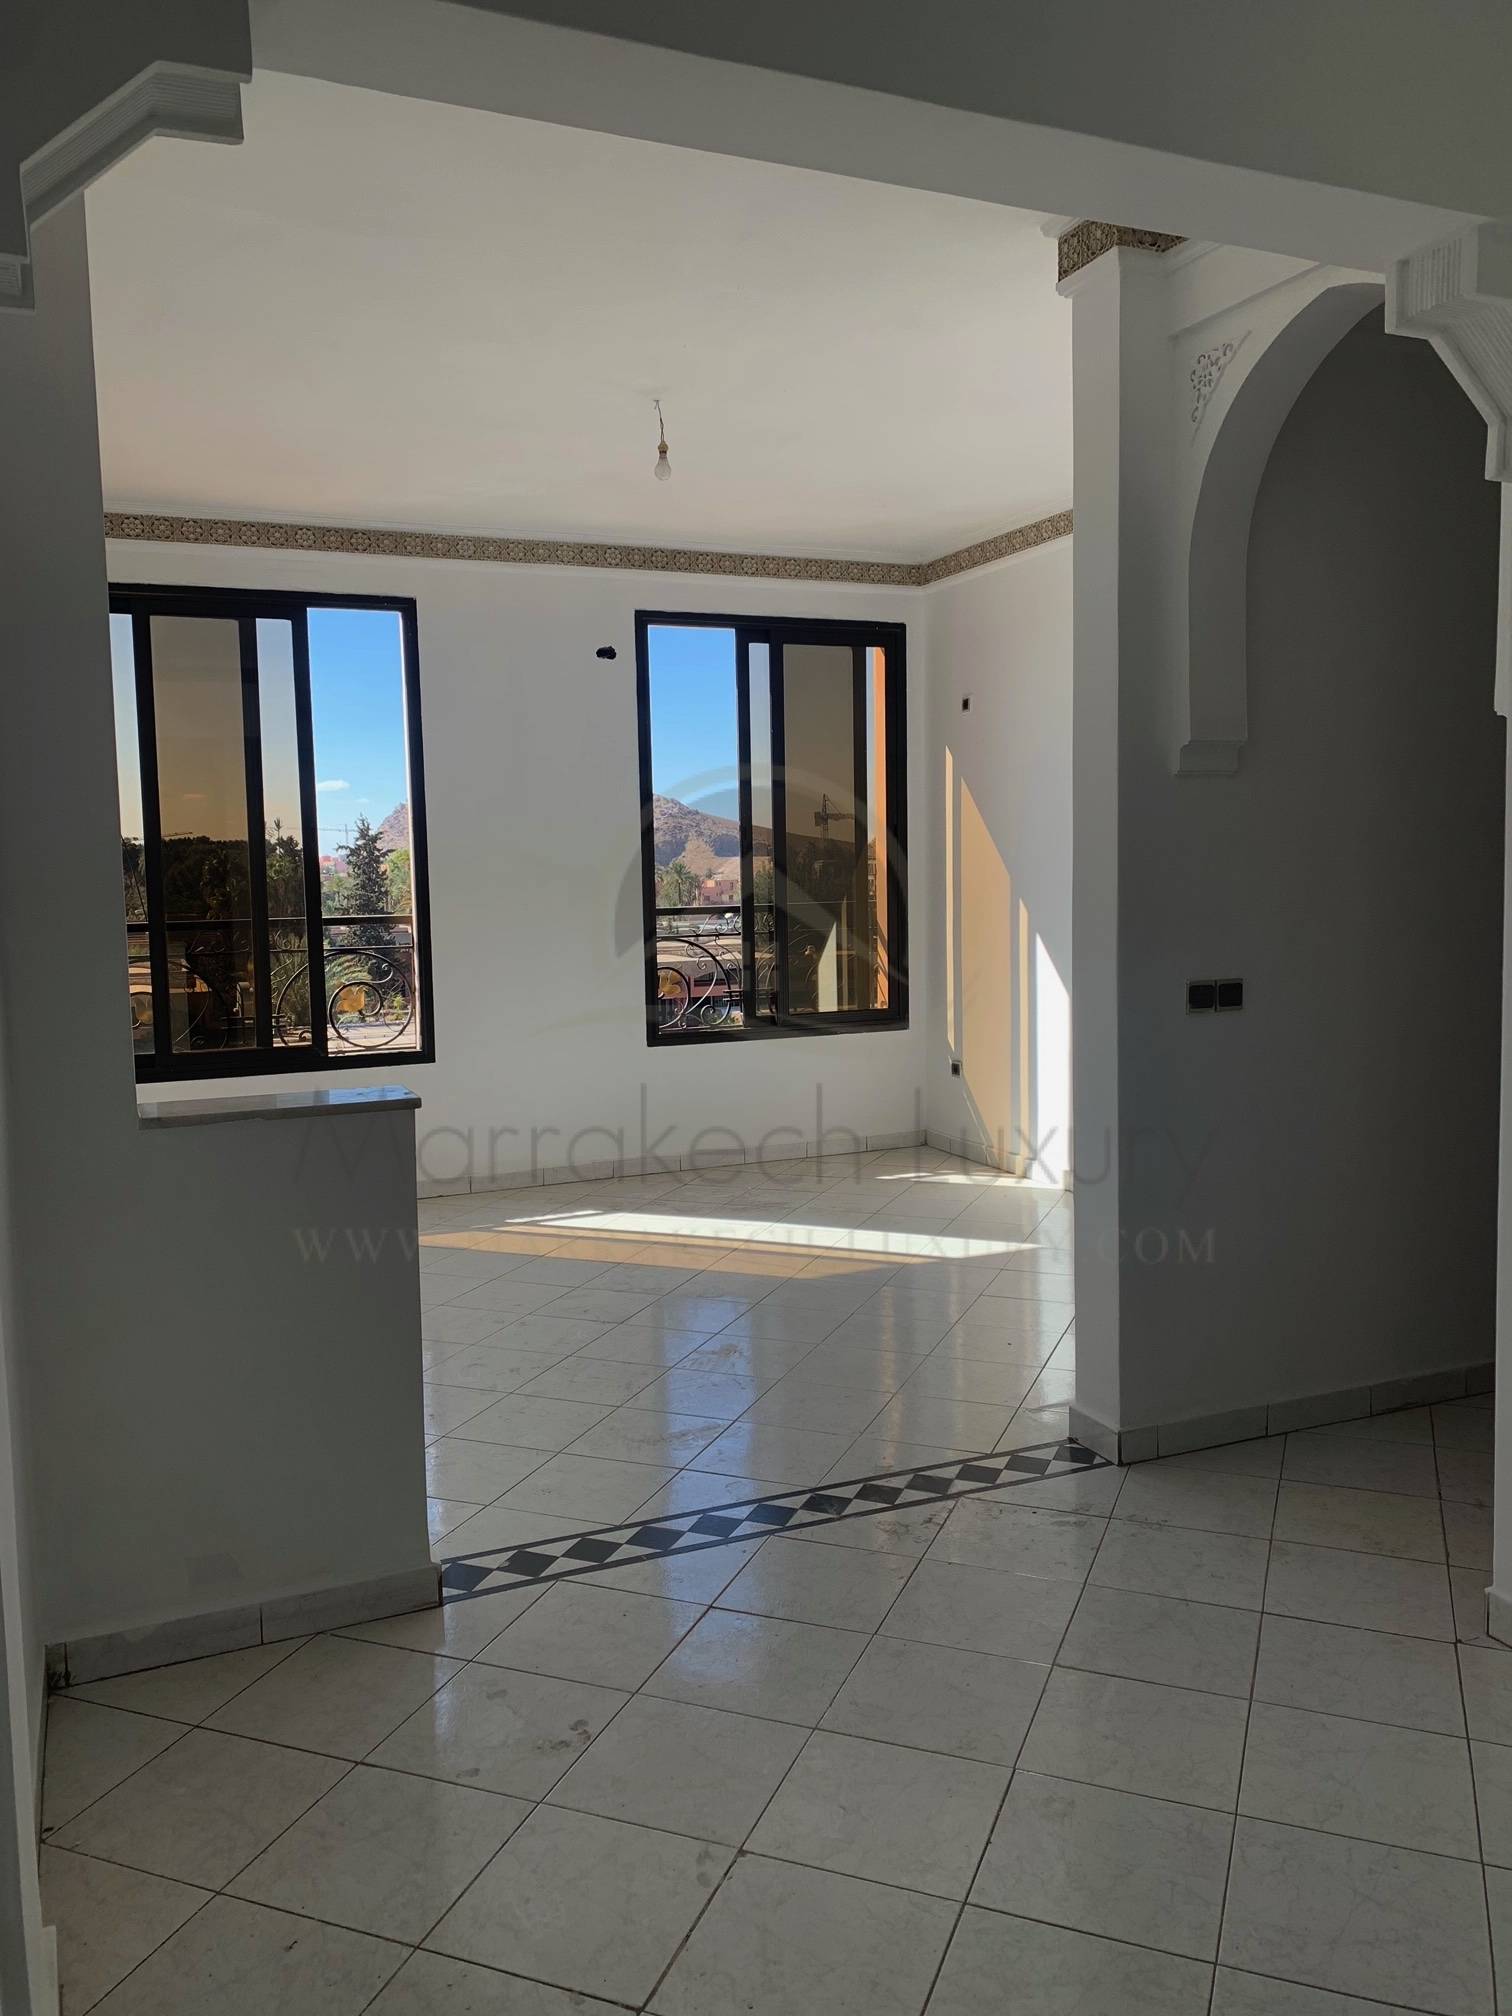 Appartement 2 chambres Semlalia Marrakech